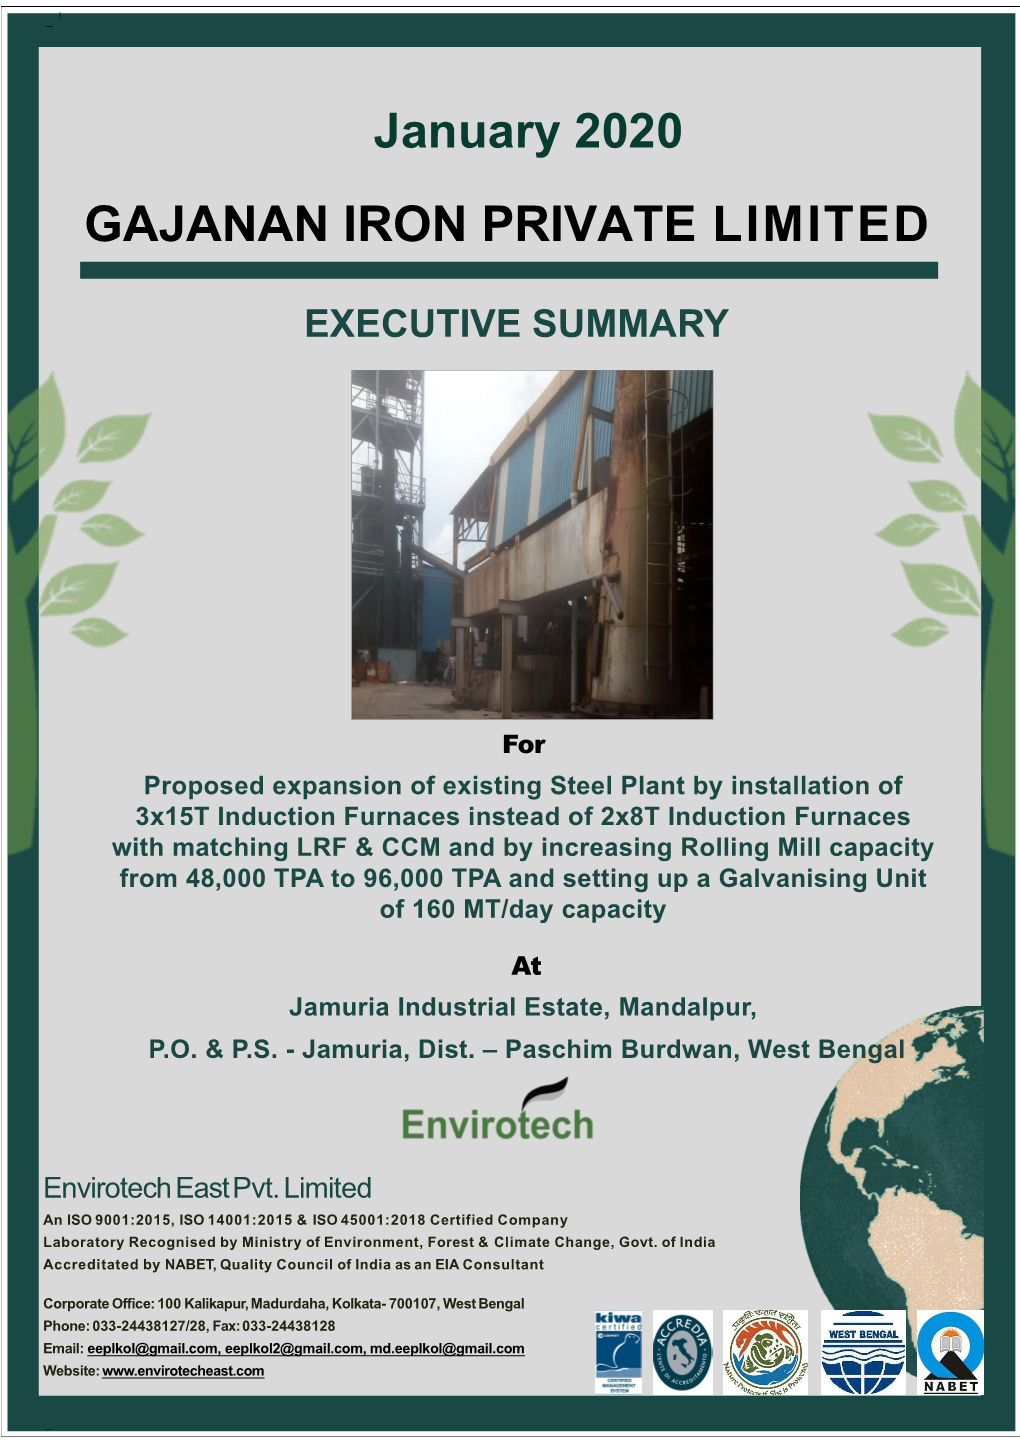 Gajanan Iron Private Limited